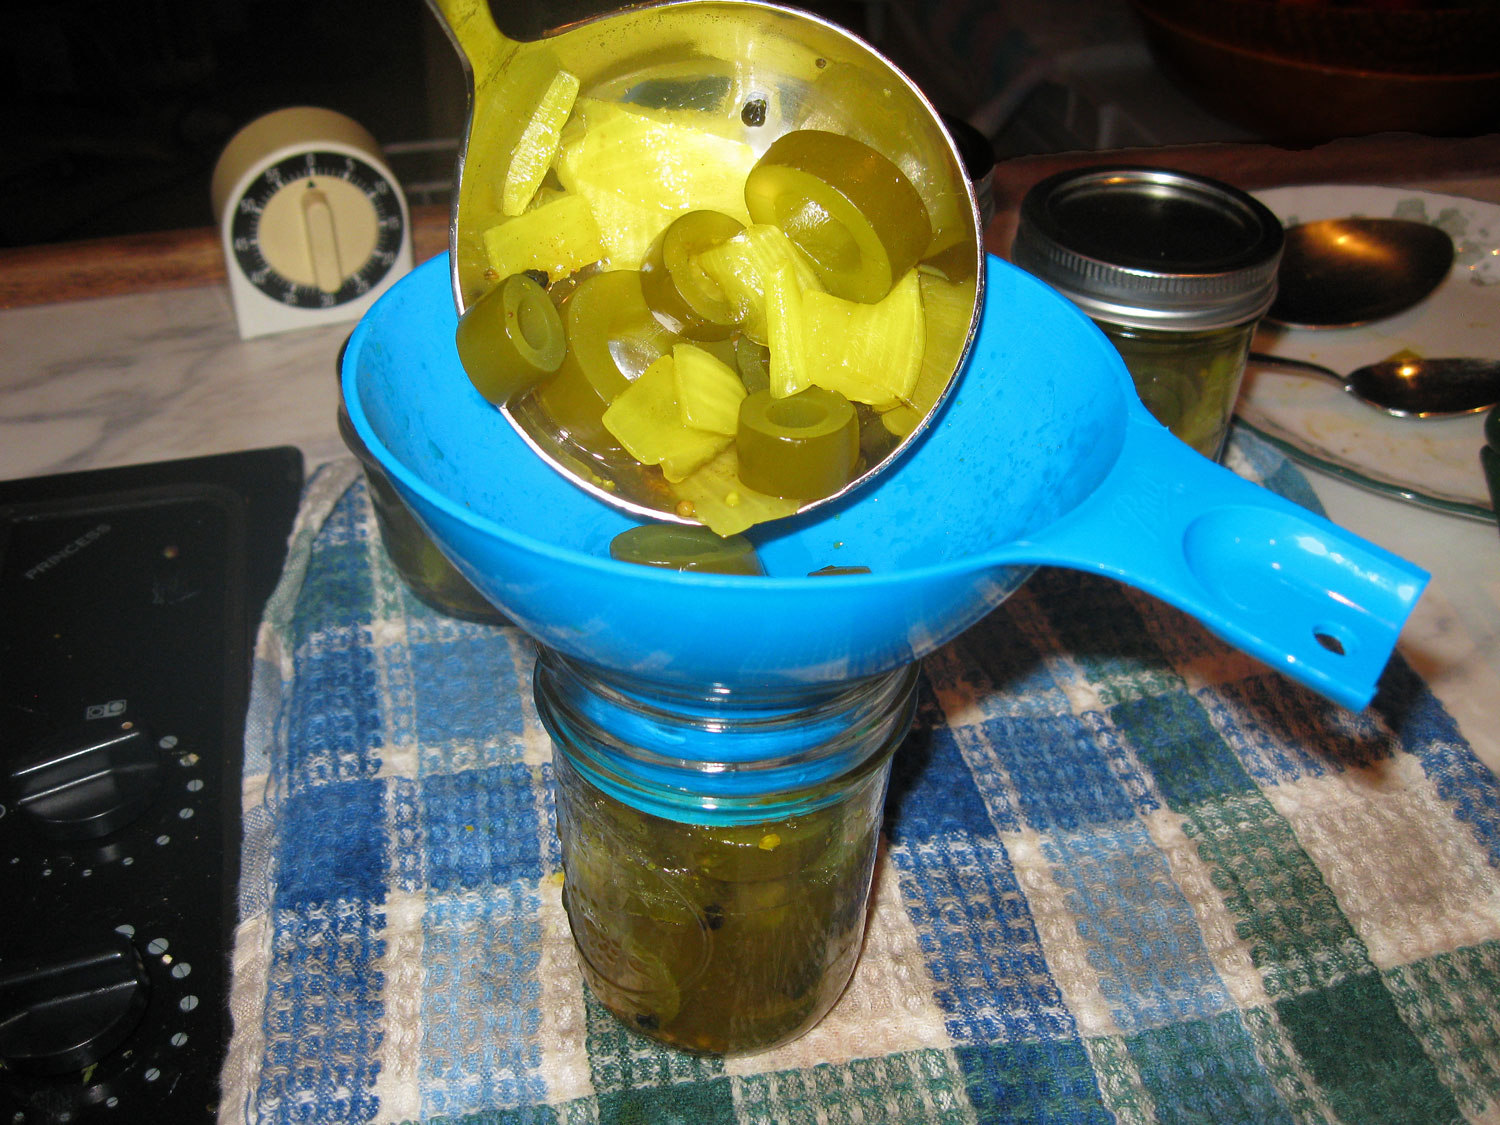 Ladling kelp pickles into the jar. 